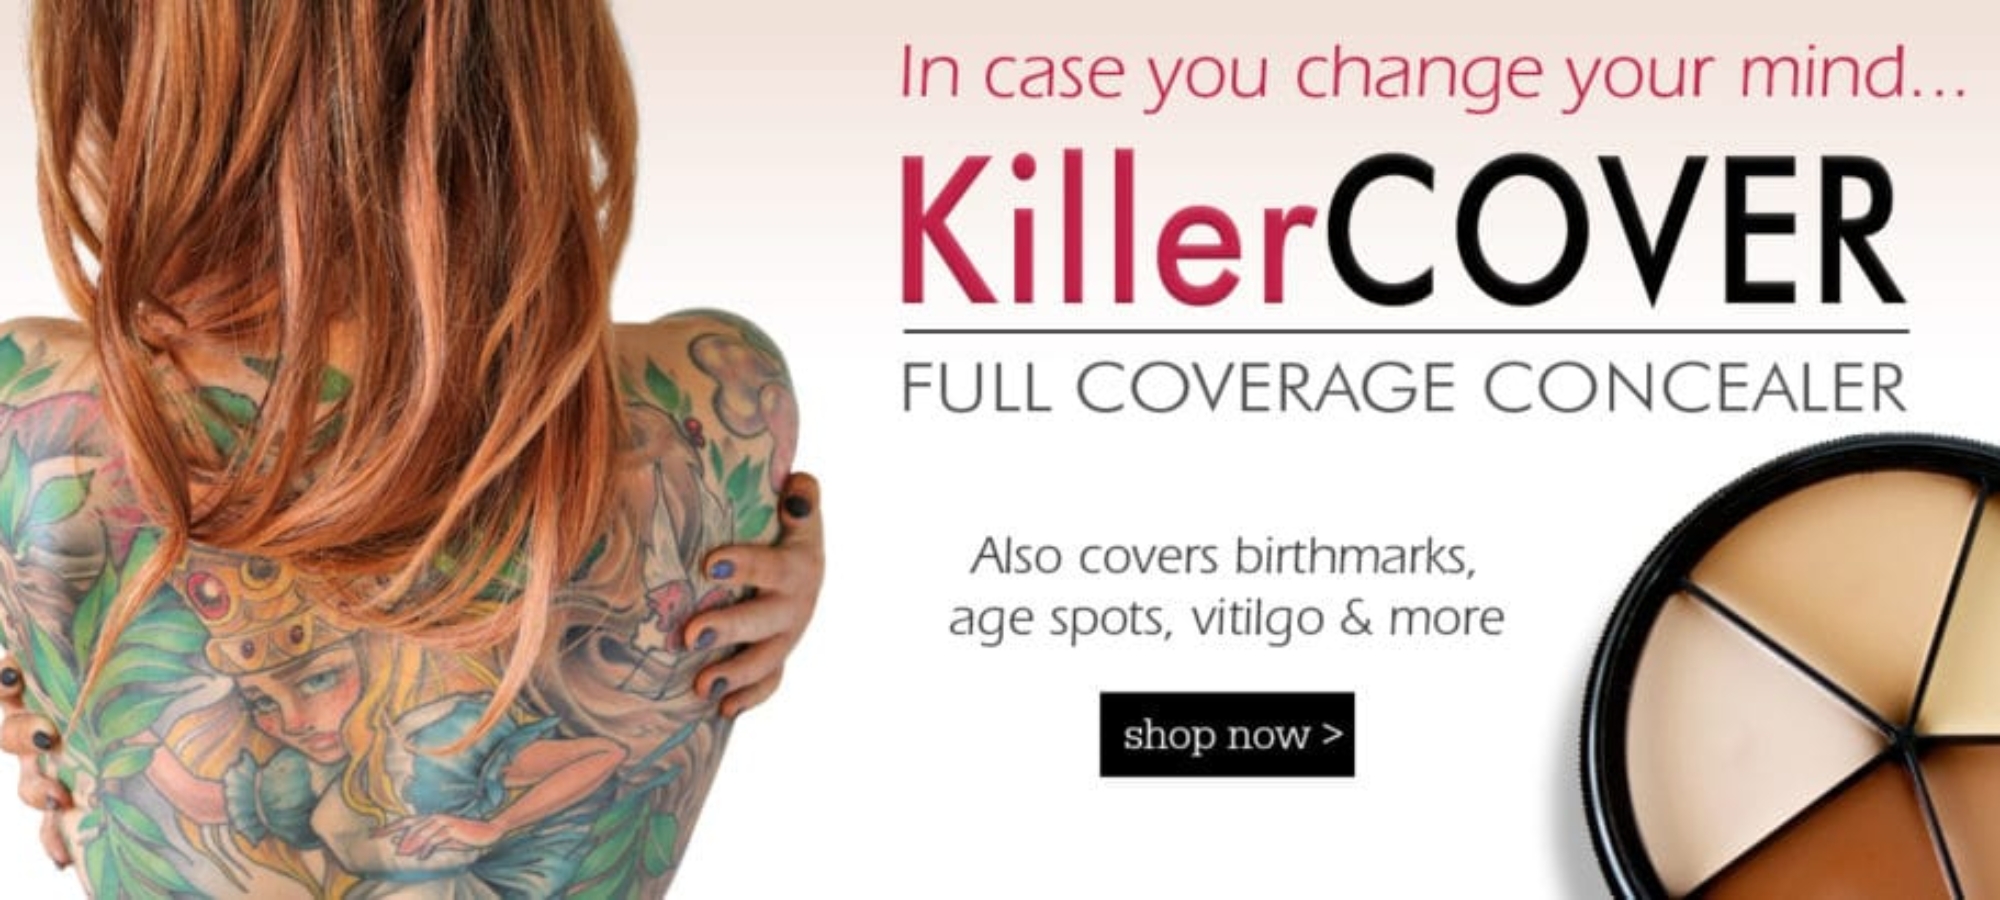 Best Concealer Makeup for Dark Under Eye Circles, Bruises, Tattoos, Acne,  Redness & More!